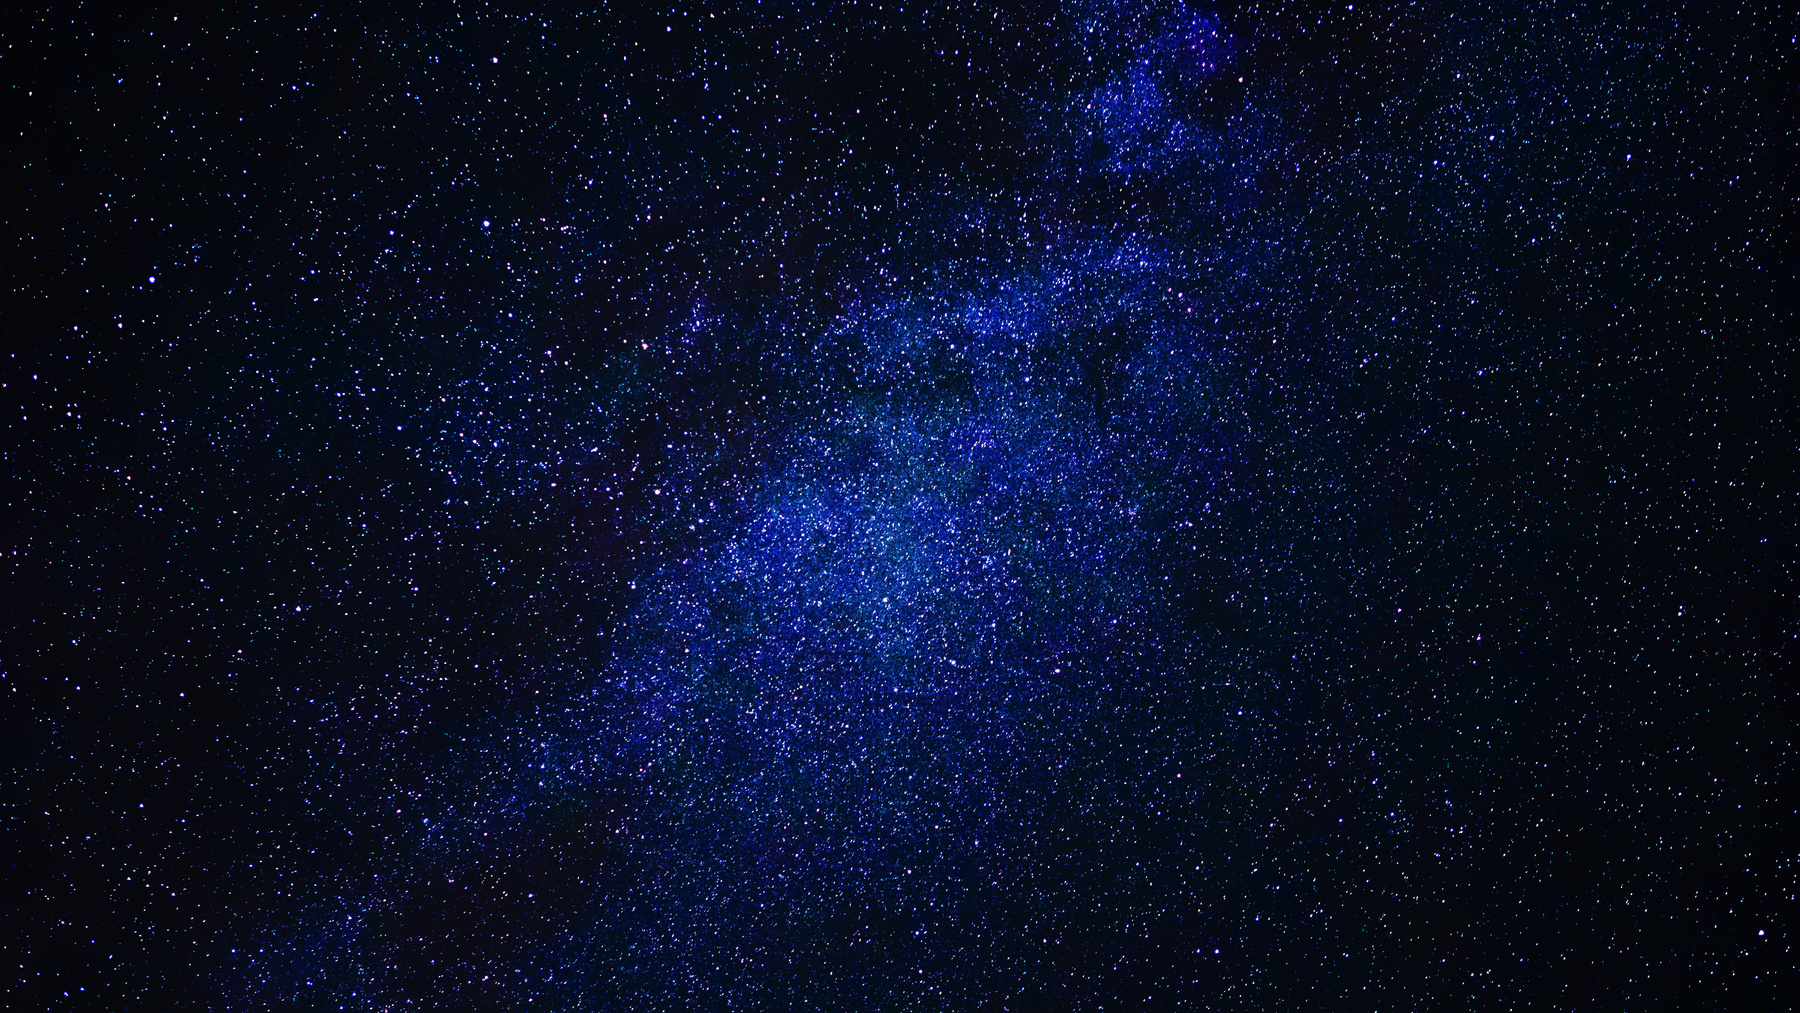 Starry Sky in the Night